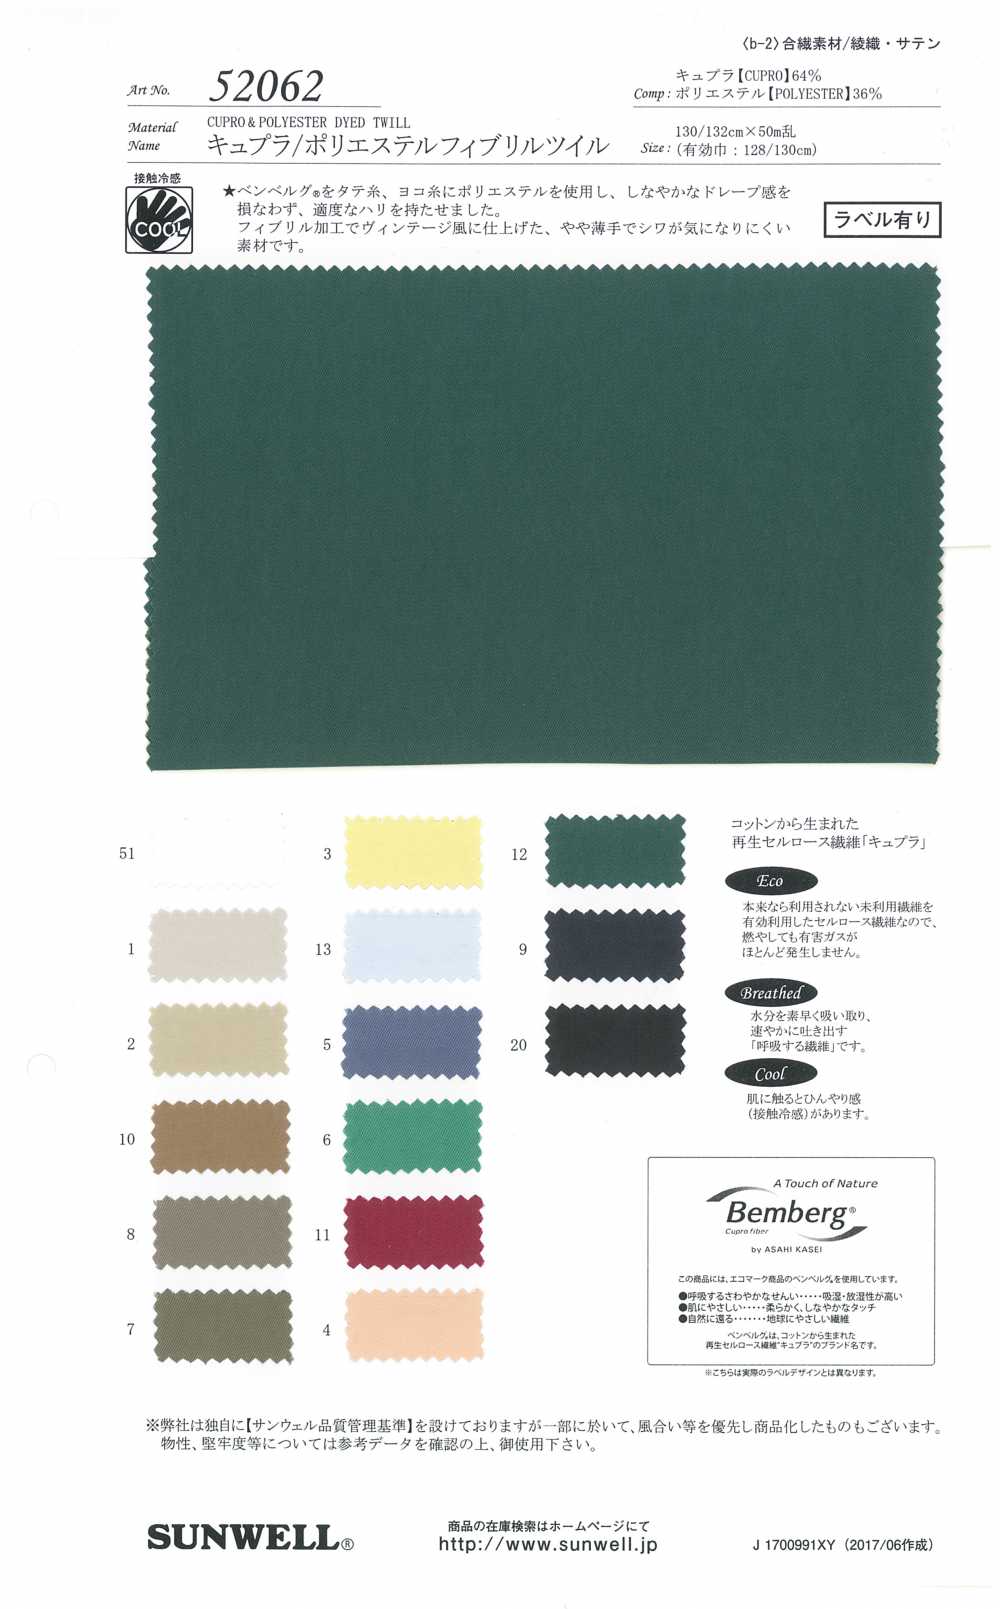 52062 Cupra / Polyester Fibrillen Twill[Textilgewebe] SUNWELL